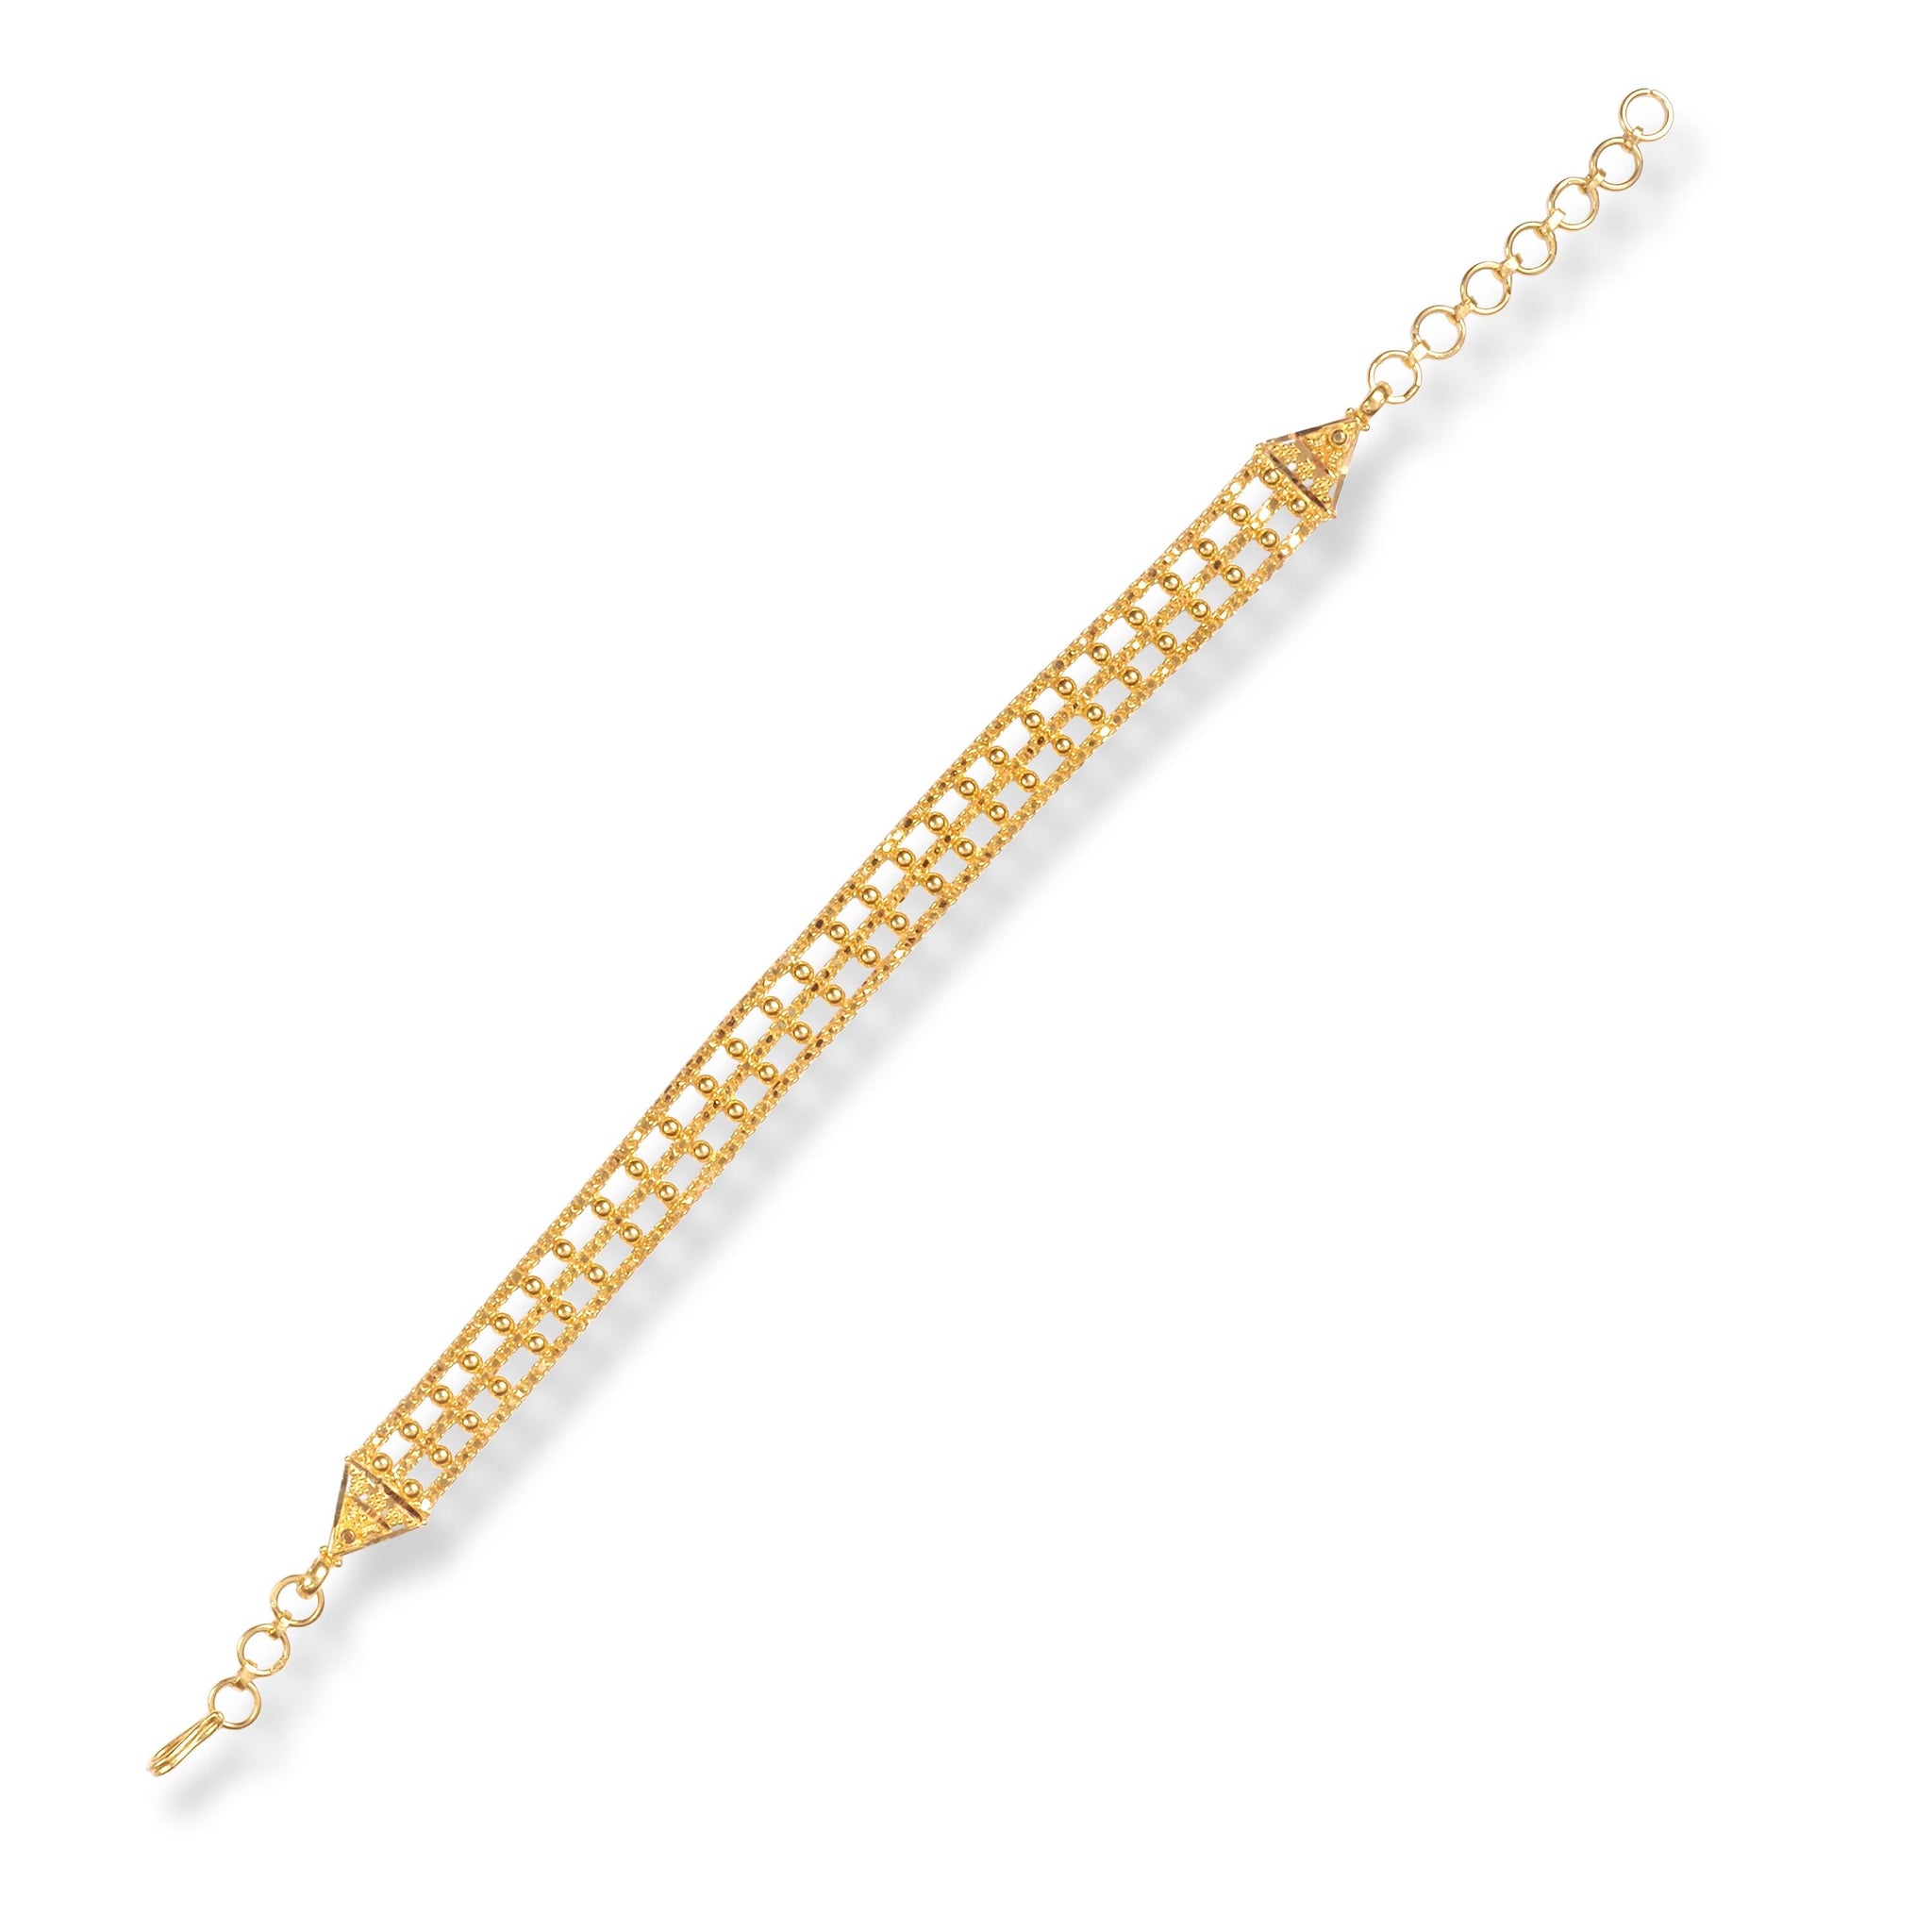 22ct Gold Ladies Bracelet in Three Row Design with U Hook Clasp LBR-7149